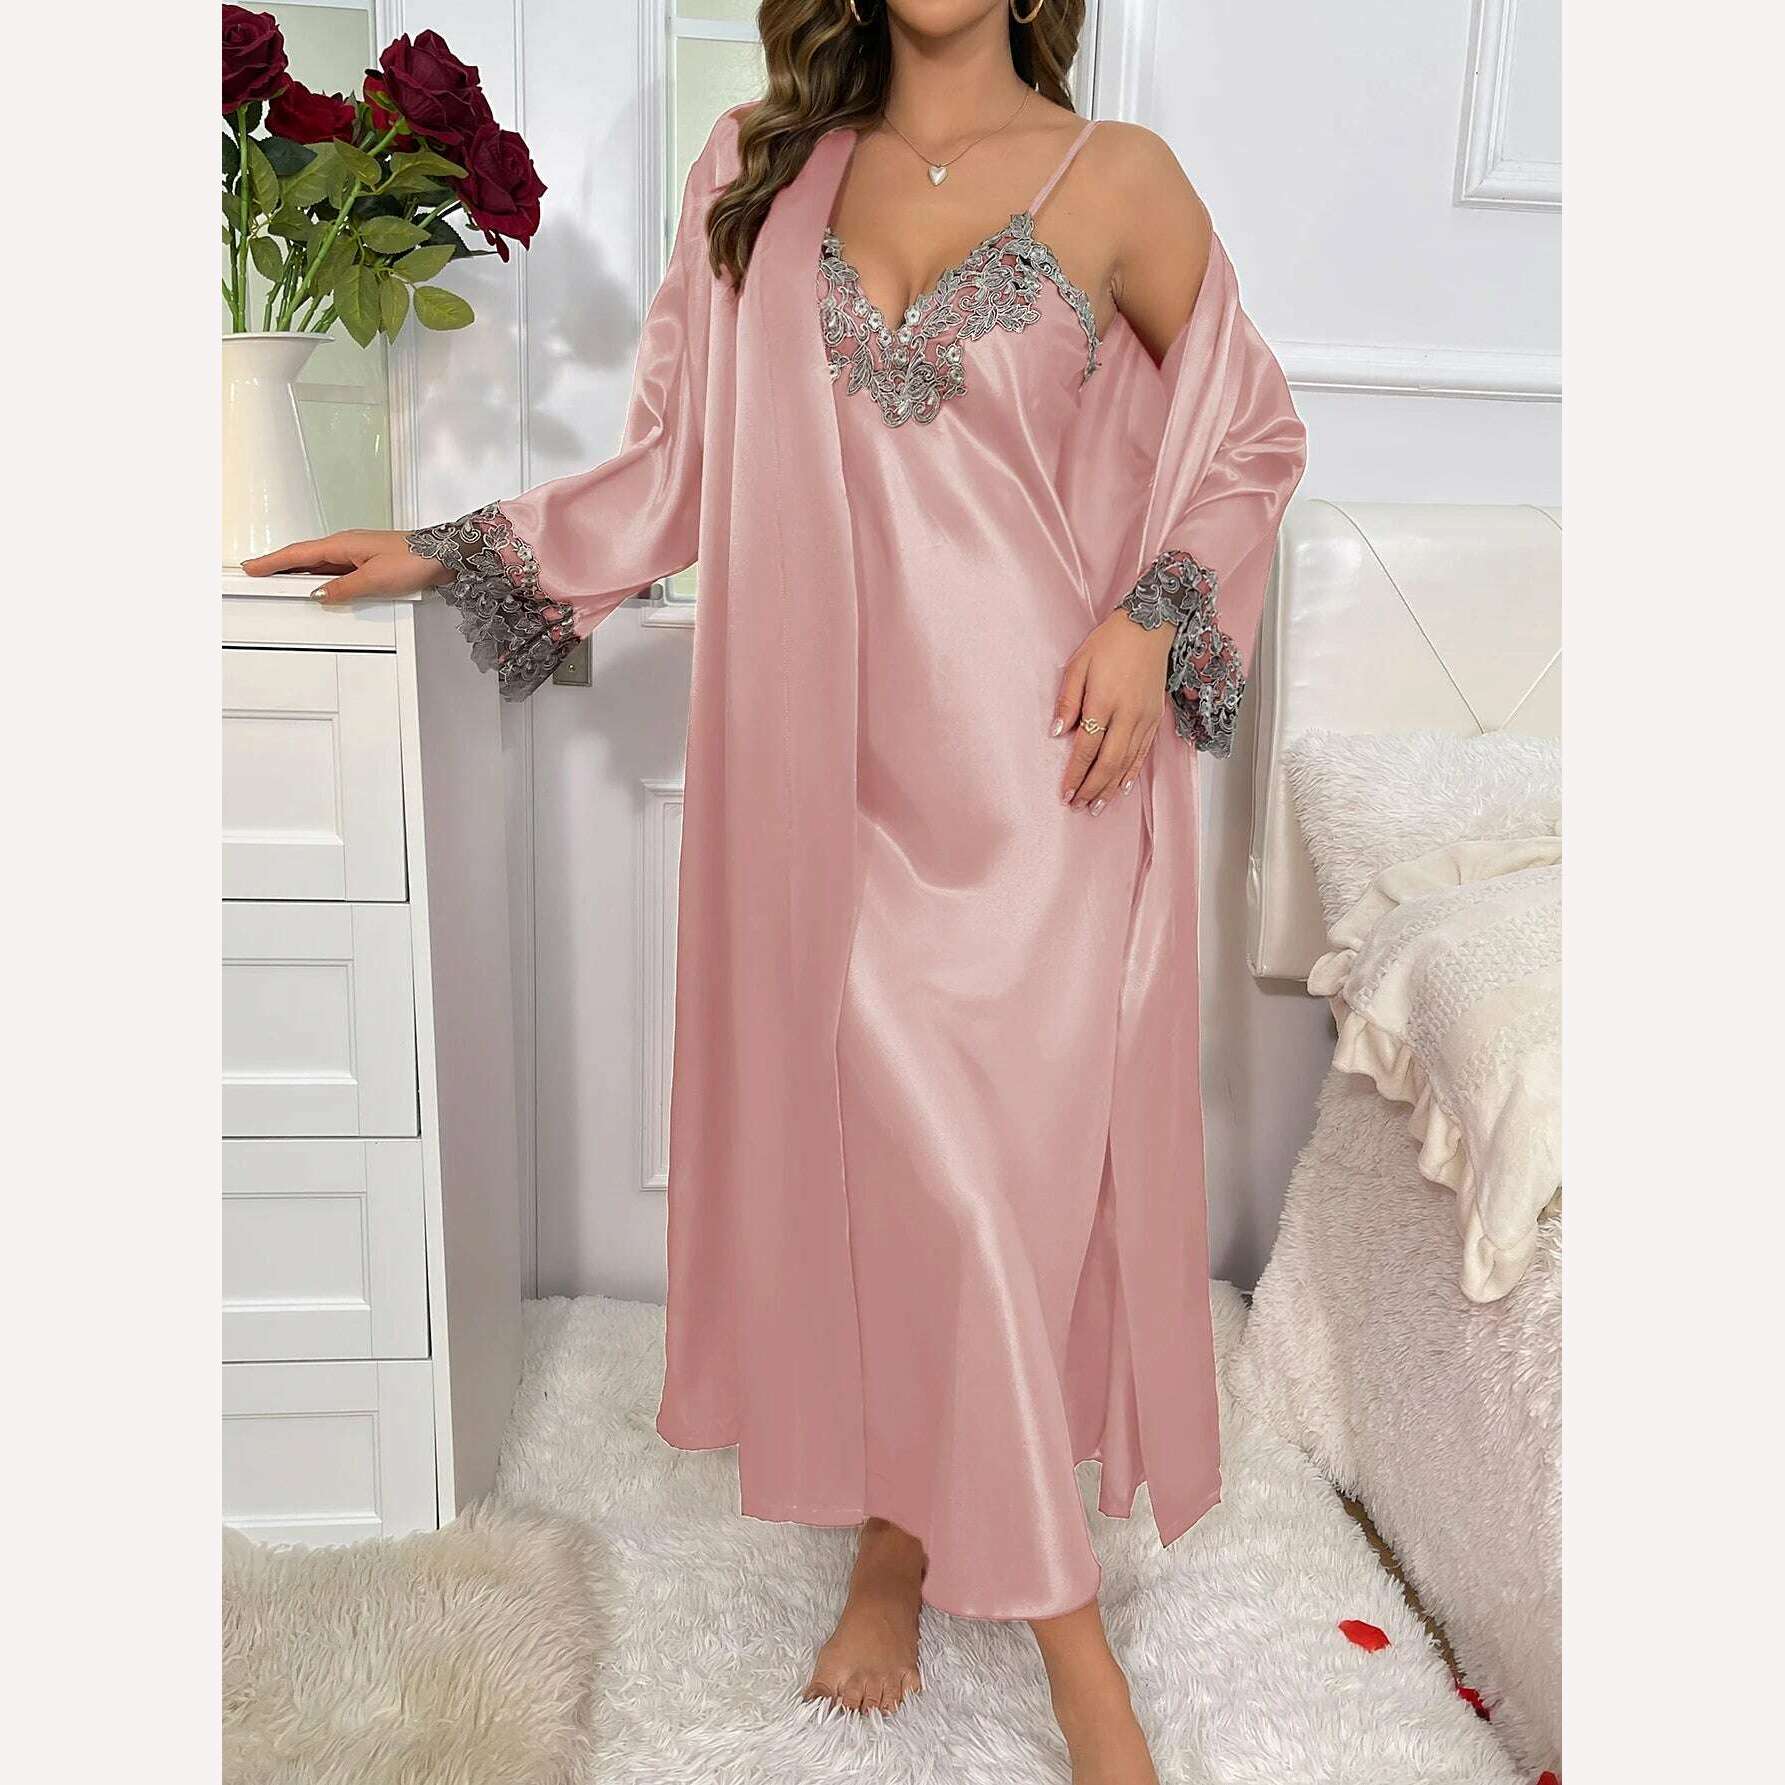 KIMLUD, 2cs Contrast Lace  Long Sleeve Belted Robe V Neck Slip Dress Sexy Elegant Women Pajamas  Sets, Pink / XL, KIMLUD Women's Clothes